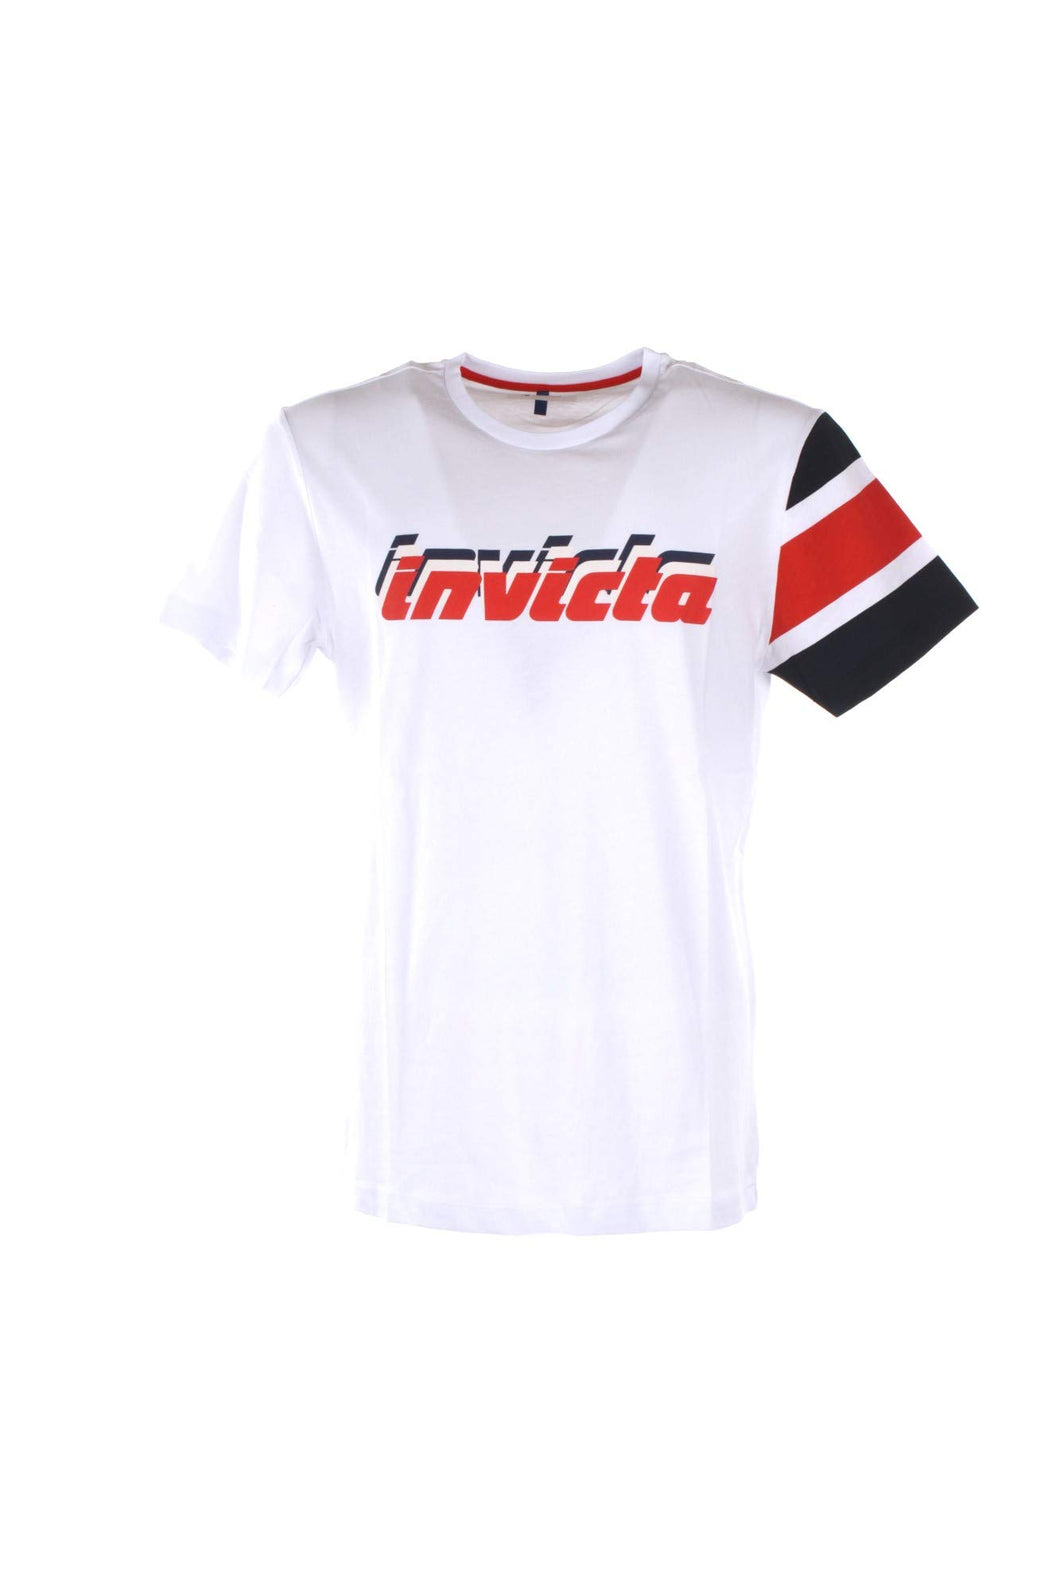 invicta T-Shirt Uomo 2XL Bianco 4451114/u Primavera Estate 2019